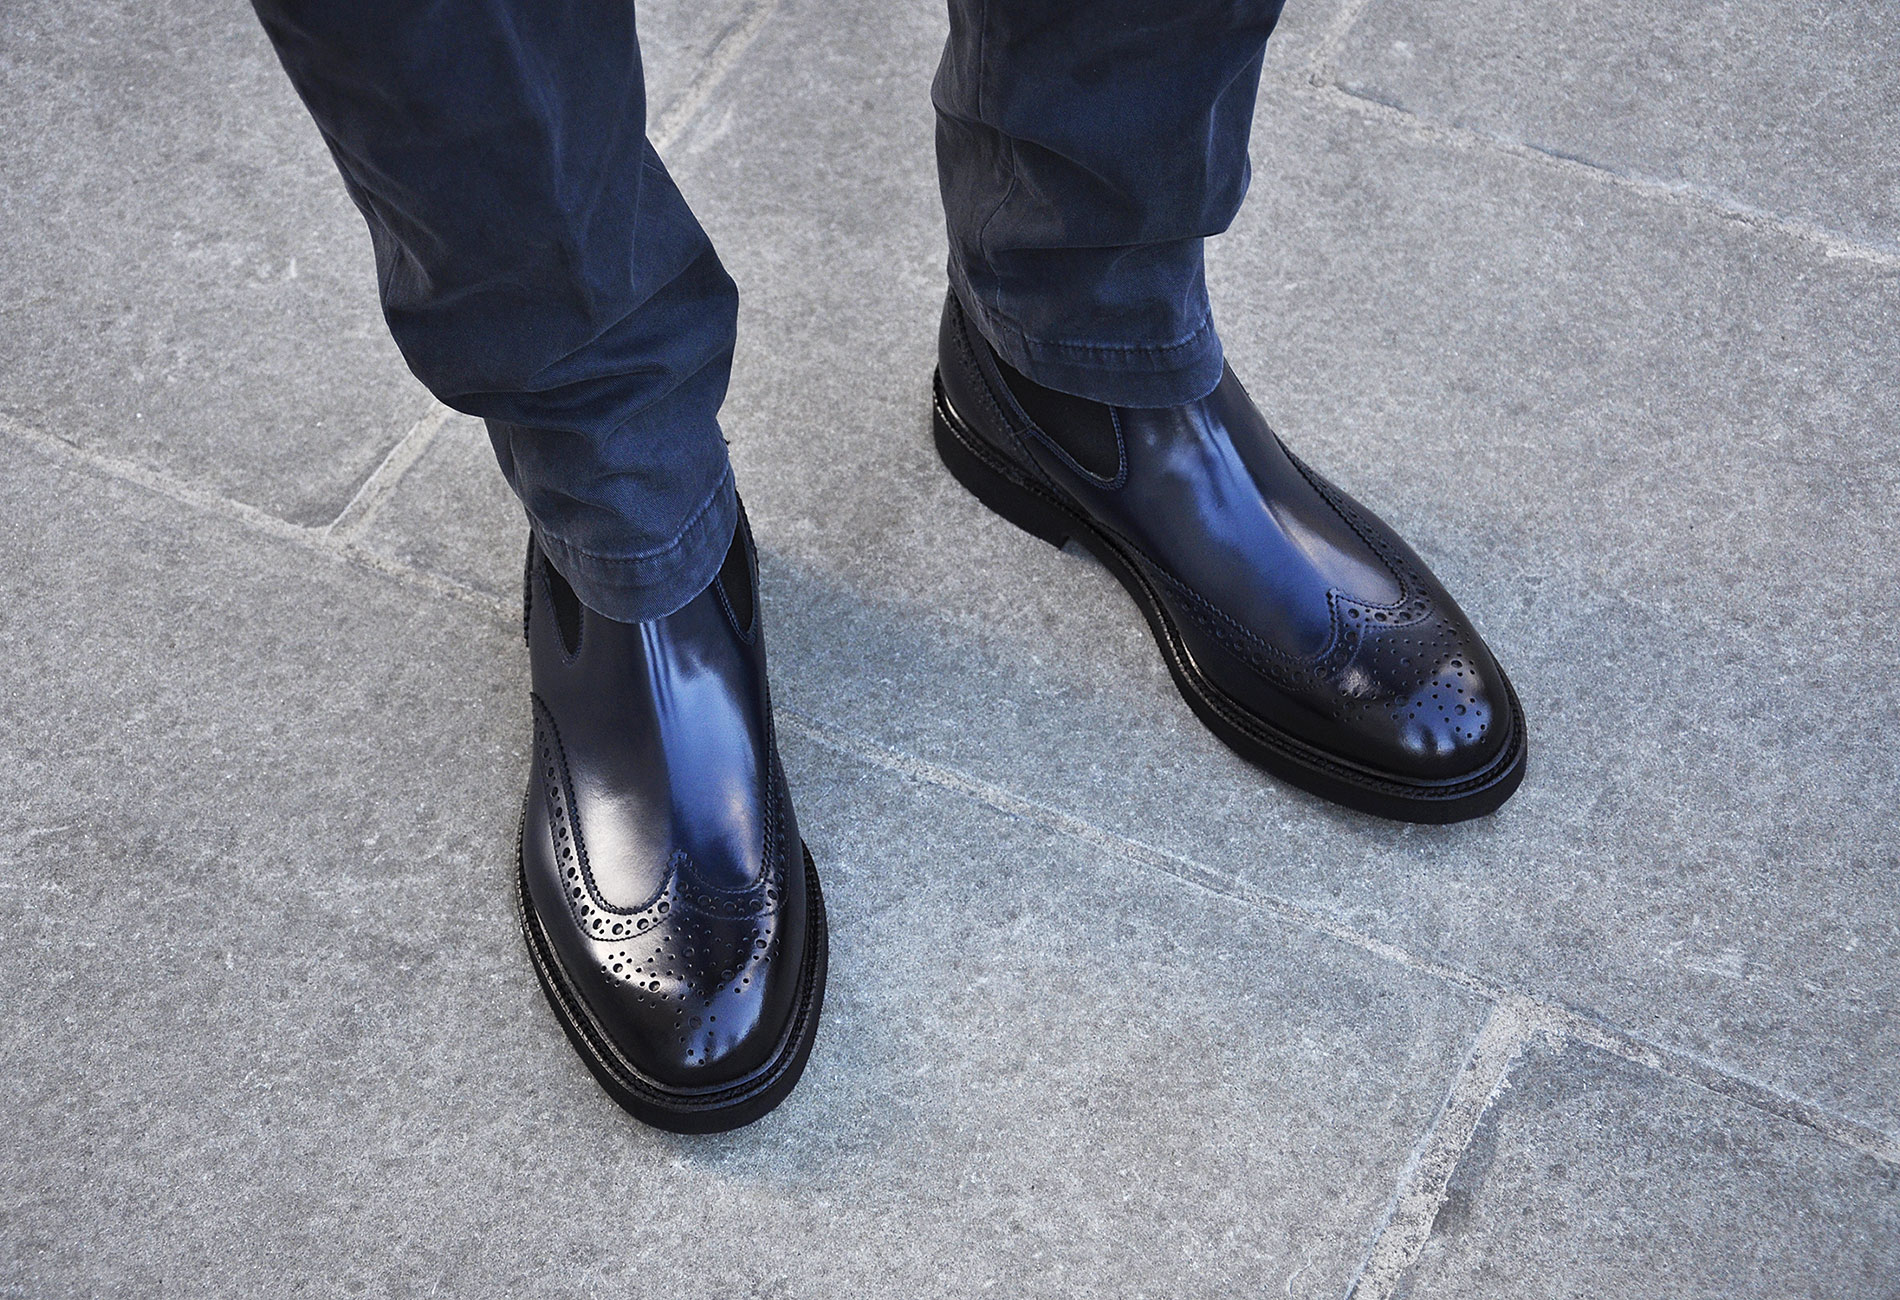 Men's Autumn/Winter Footwear - A guide to men's boots - Tieapart Blog